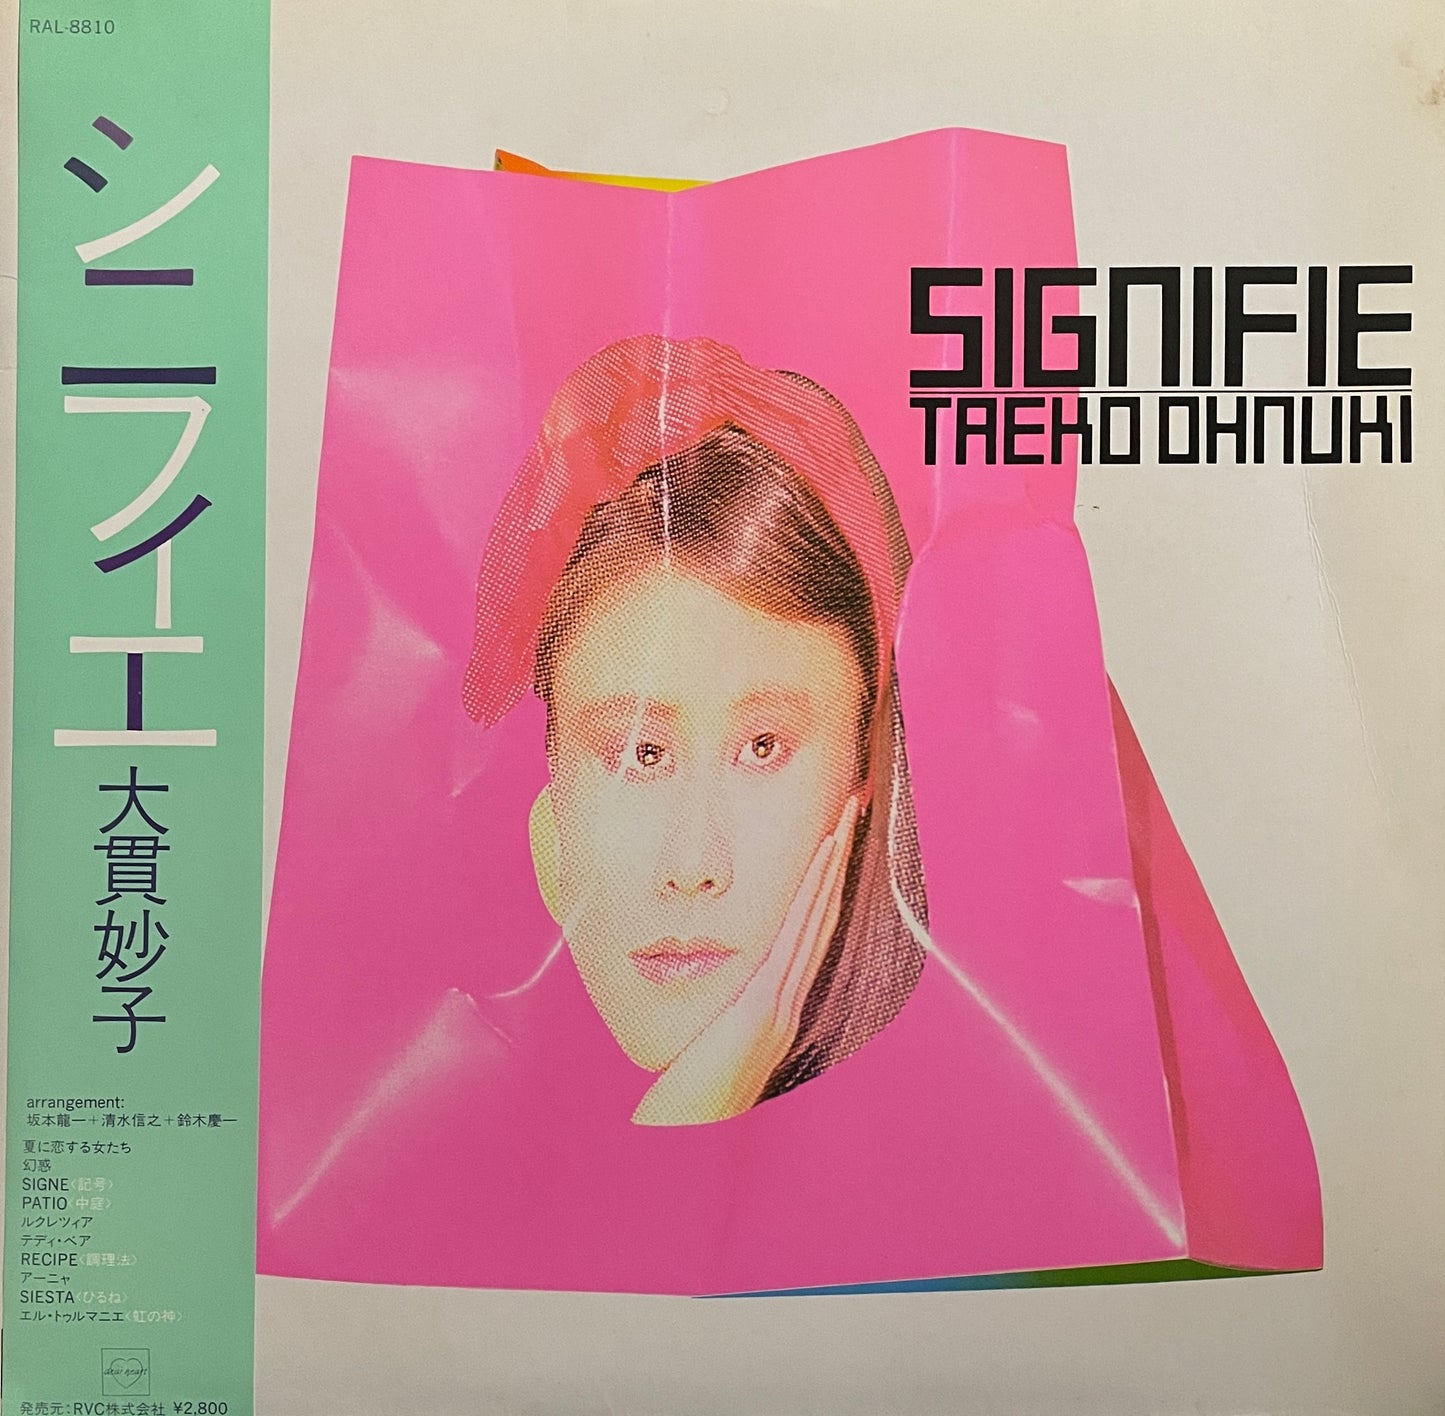 Taeko Ohnuki "Signifie" (1983)